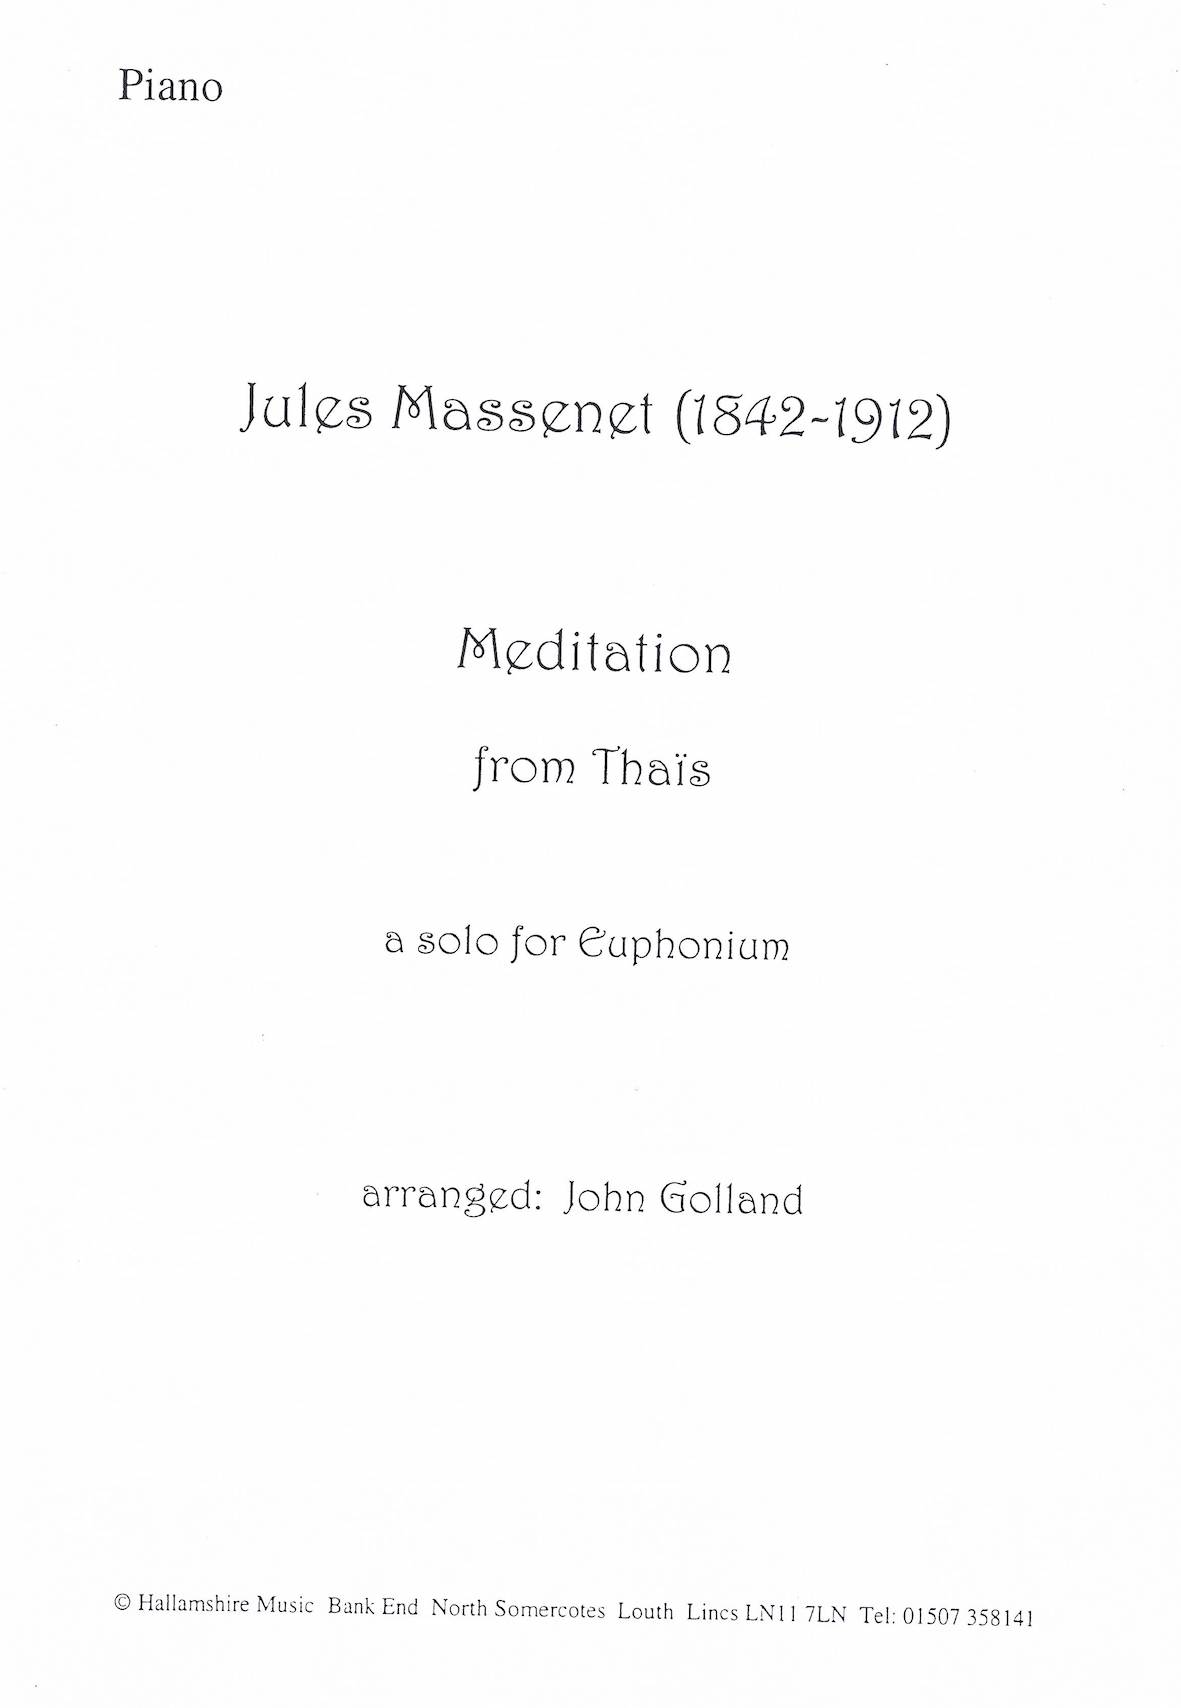 Meditation from Thais - Jules Massenet Arr. John Golland - Euphonium and Piano (TC only)